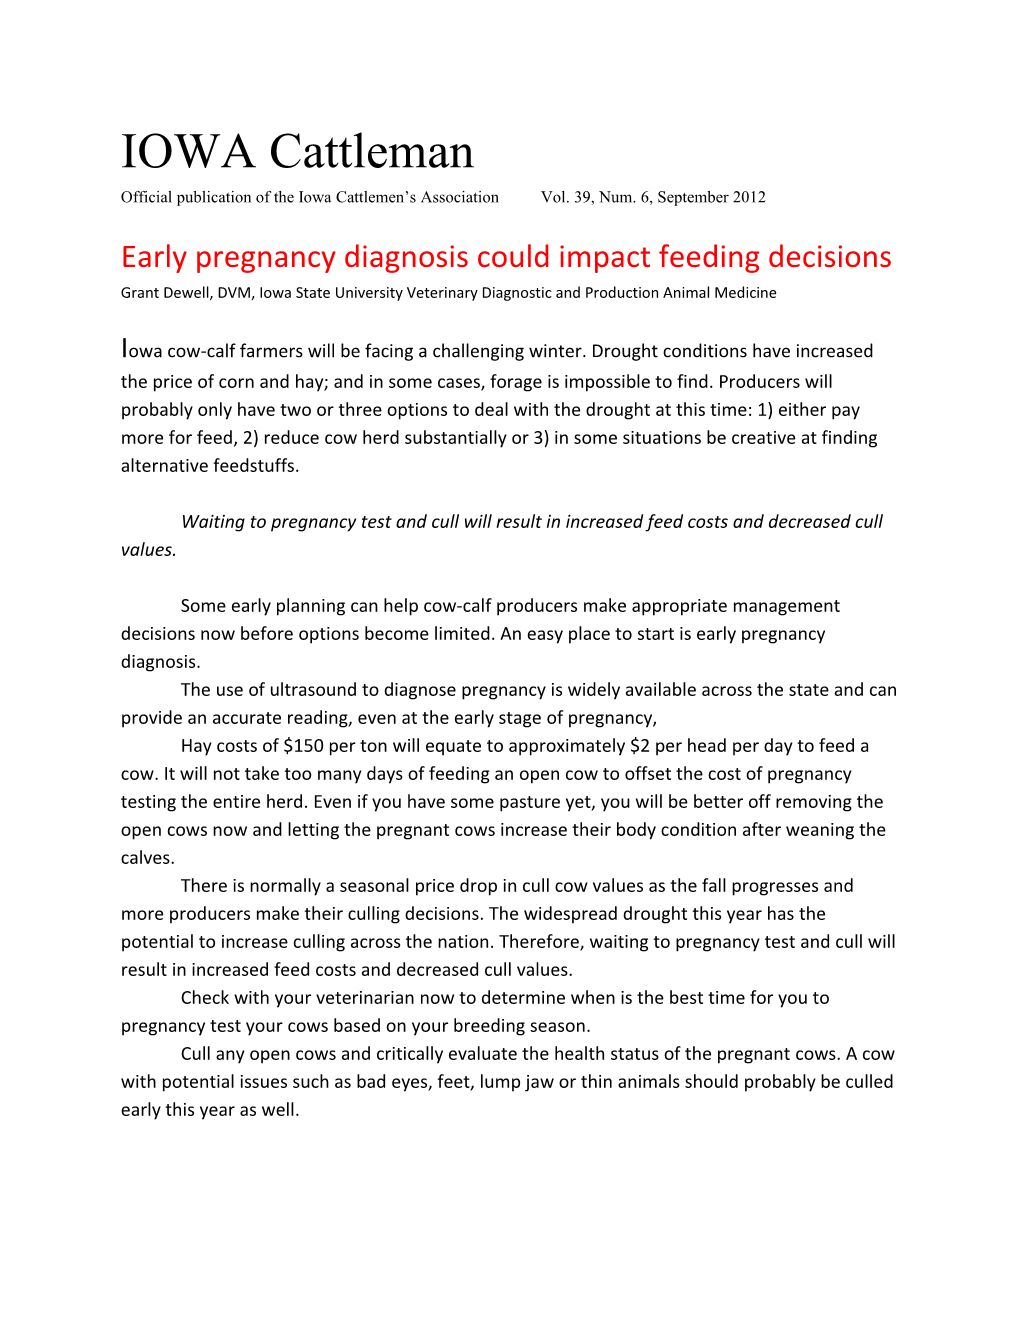 Official Publication of the Iowa Cattlemen S Association Vol. 39, Num. 6, September 2012